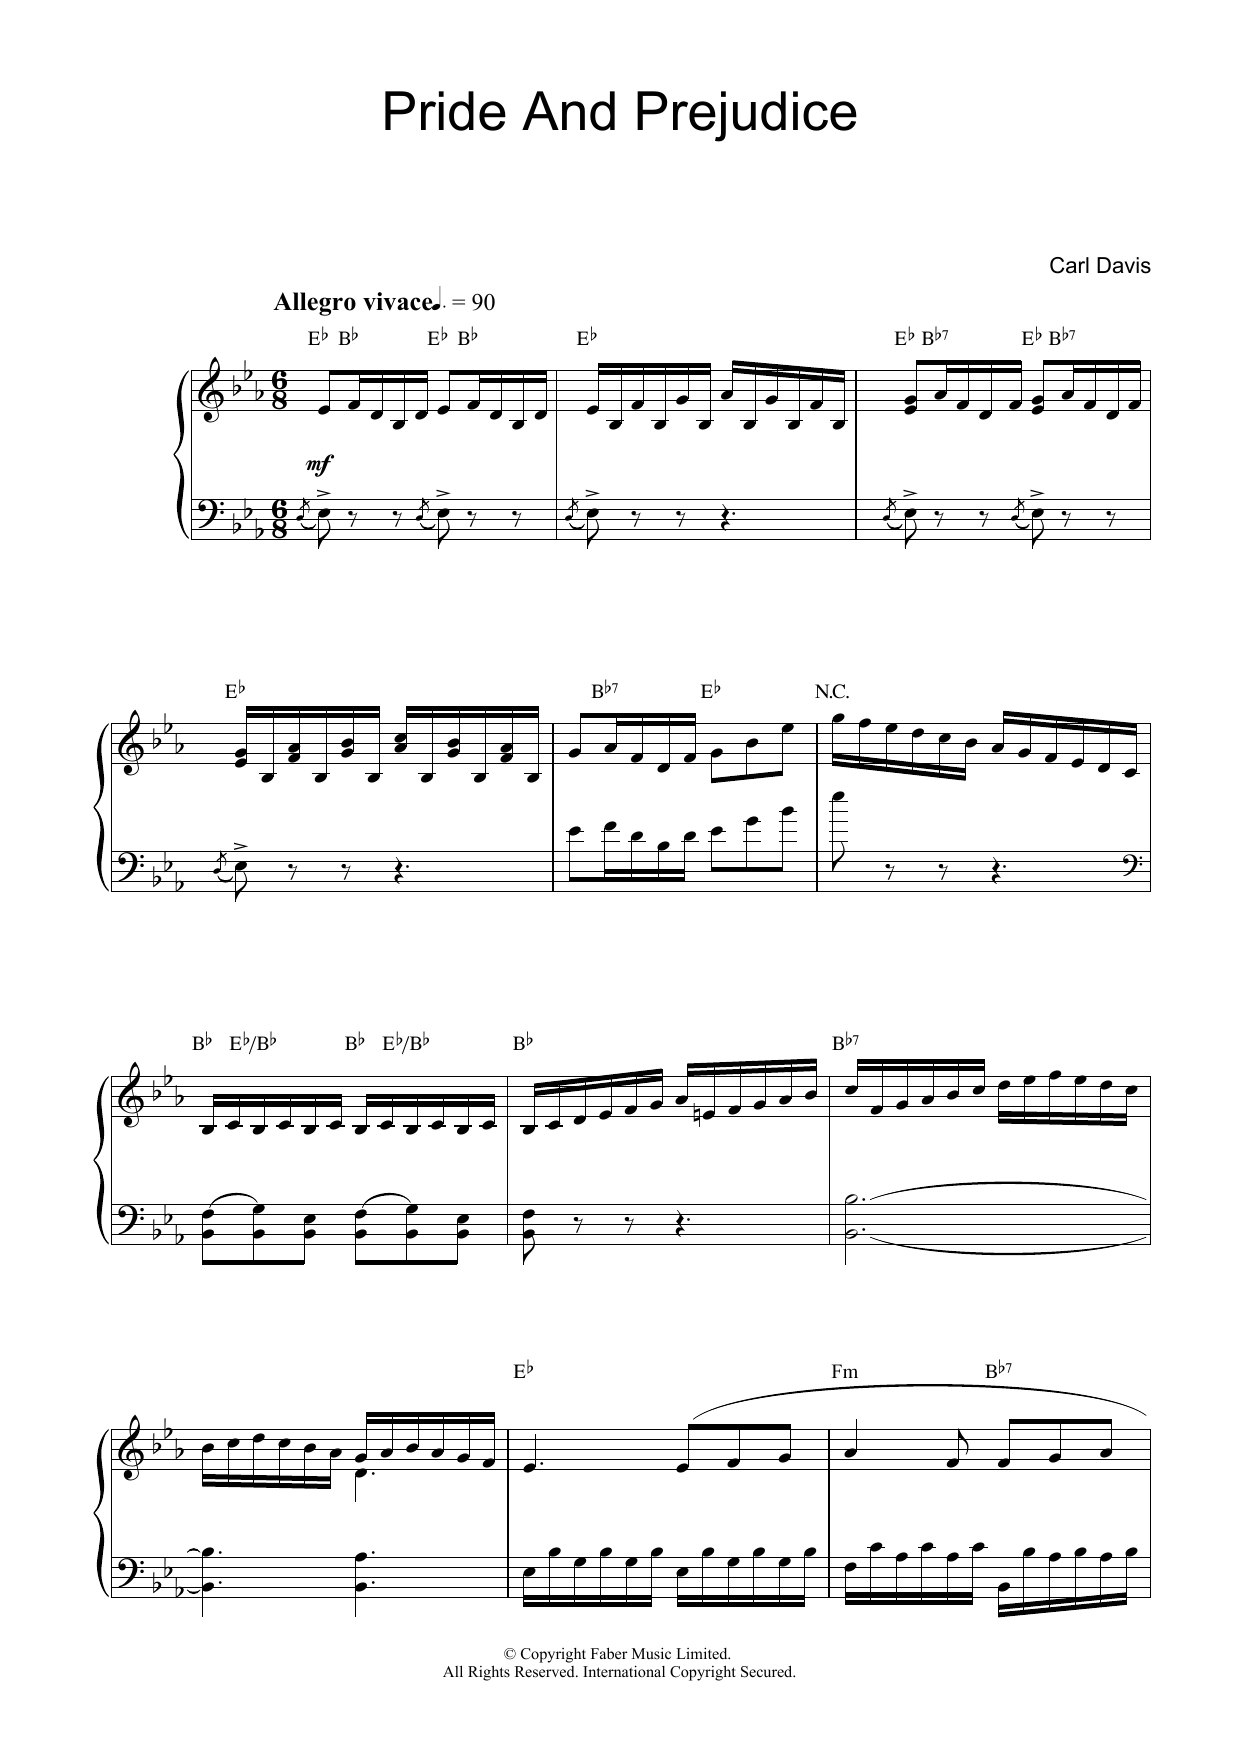 Carl Davis Pride And Prejudice Sheet Music Notes & Chords for Clarinet - Download or Print PDF